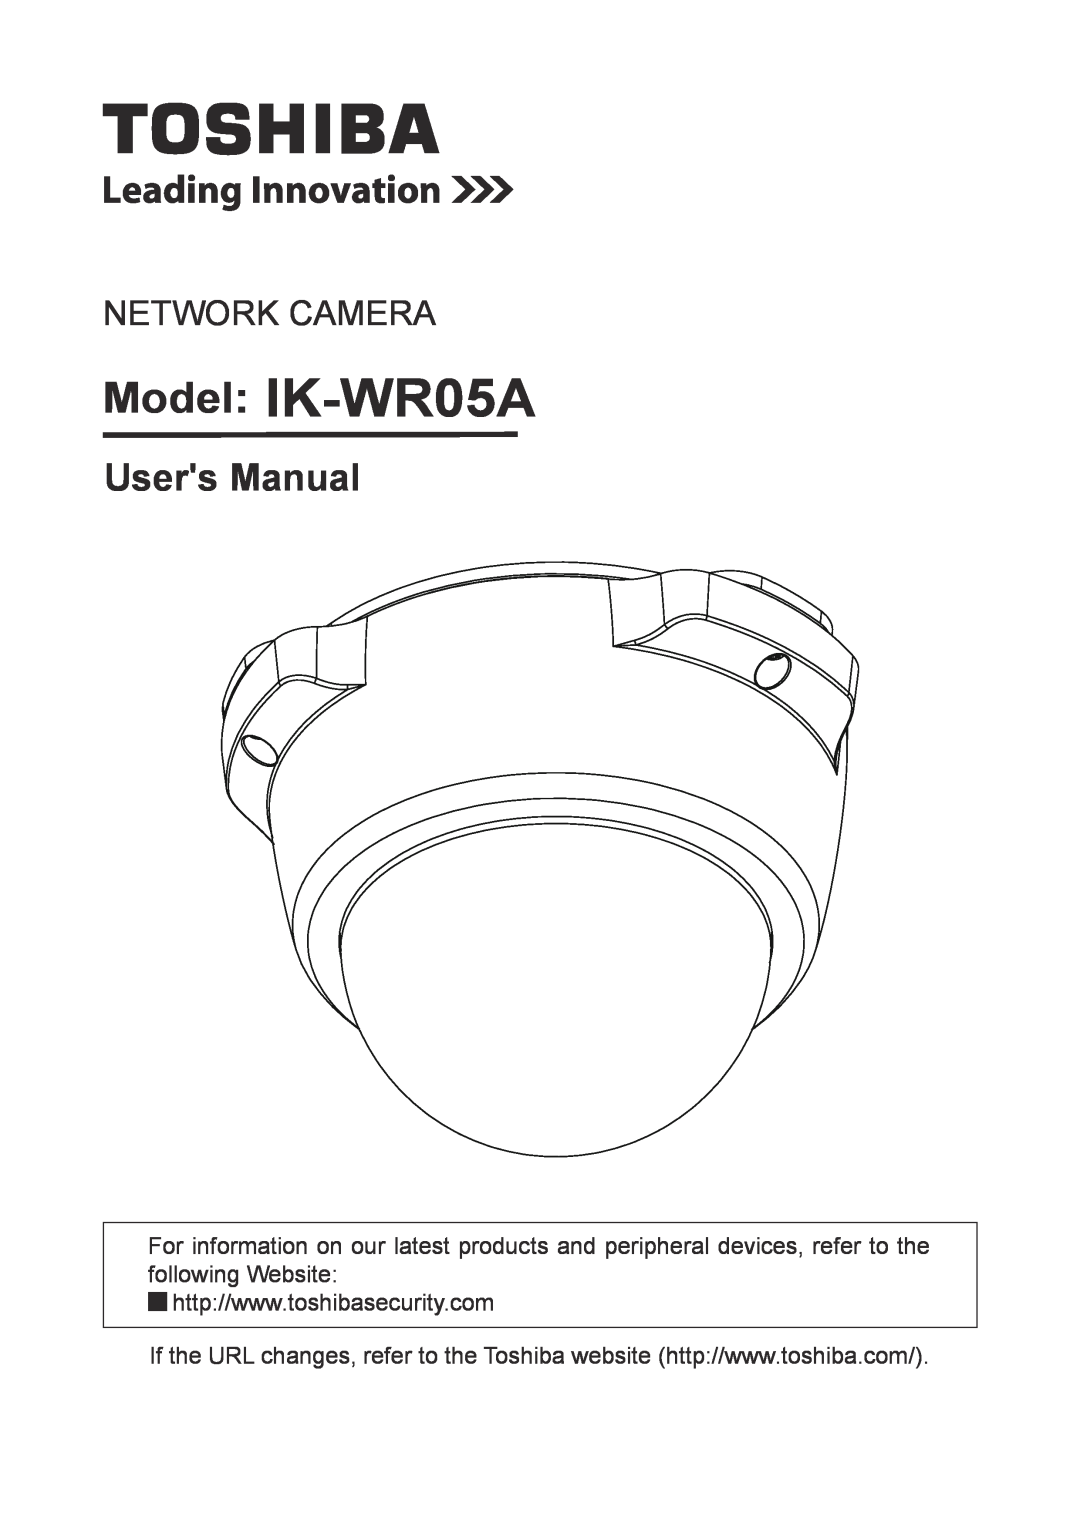 Toshiba user manual Model IK-WR05A, Users Manual, Network Camera 